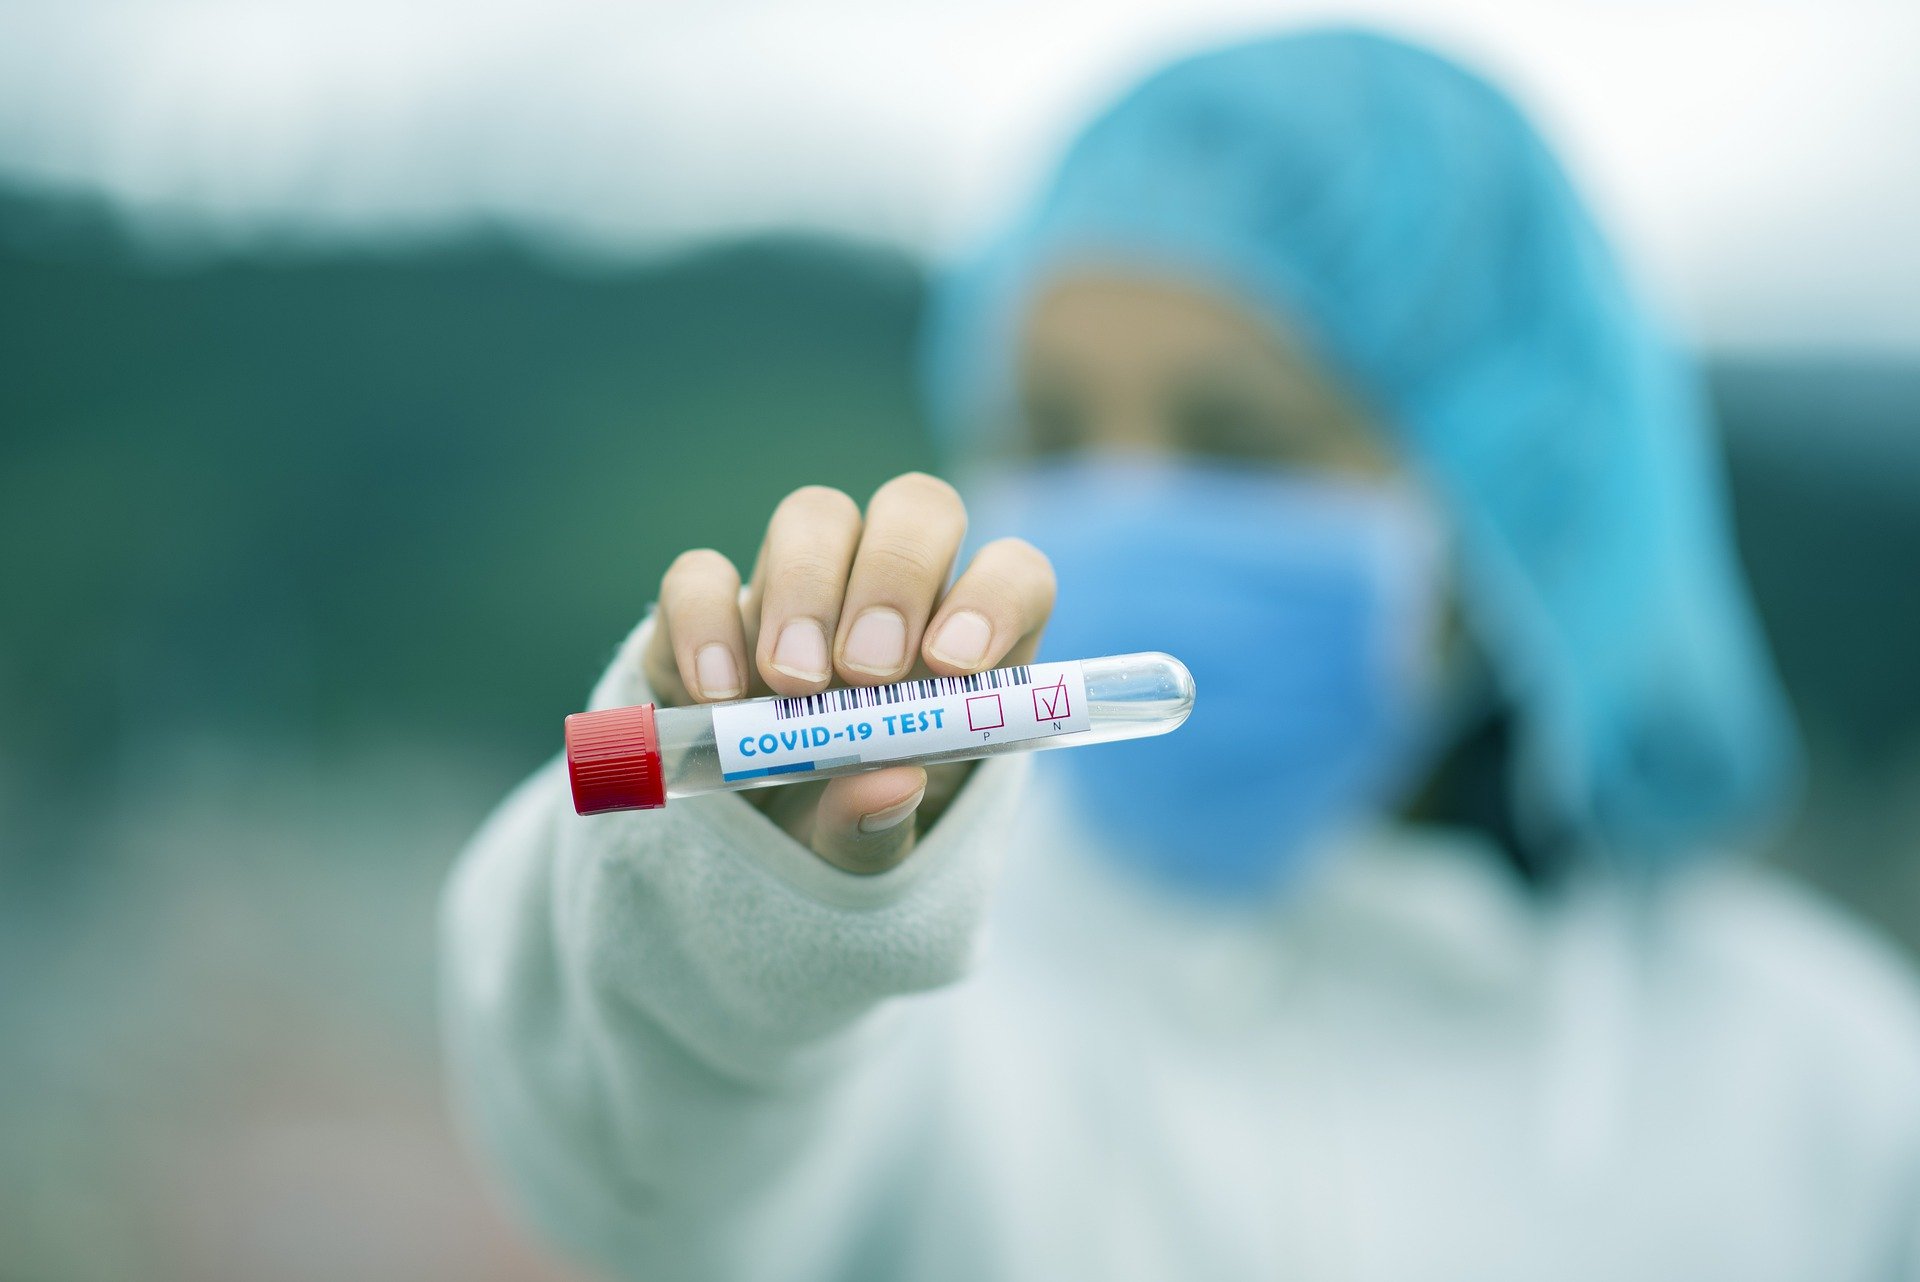 Coronavirus, in Toscana 30 nuovi casi (10 emersi dai test sierologici), 3 decessi e 252 guarigioni, di cui 163 virali